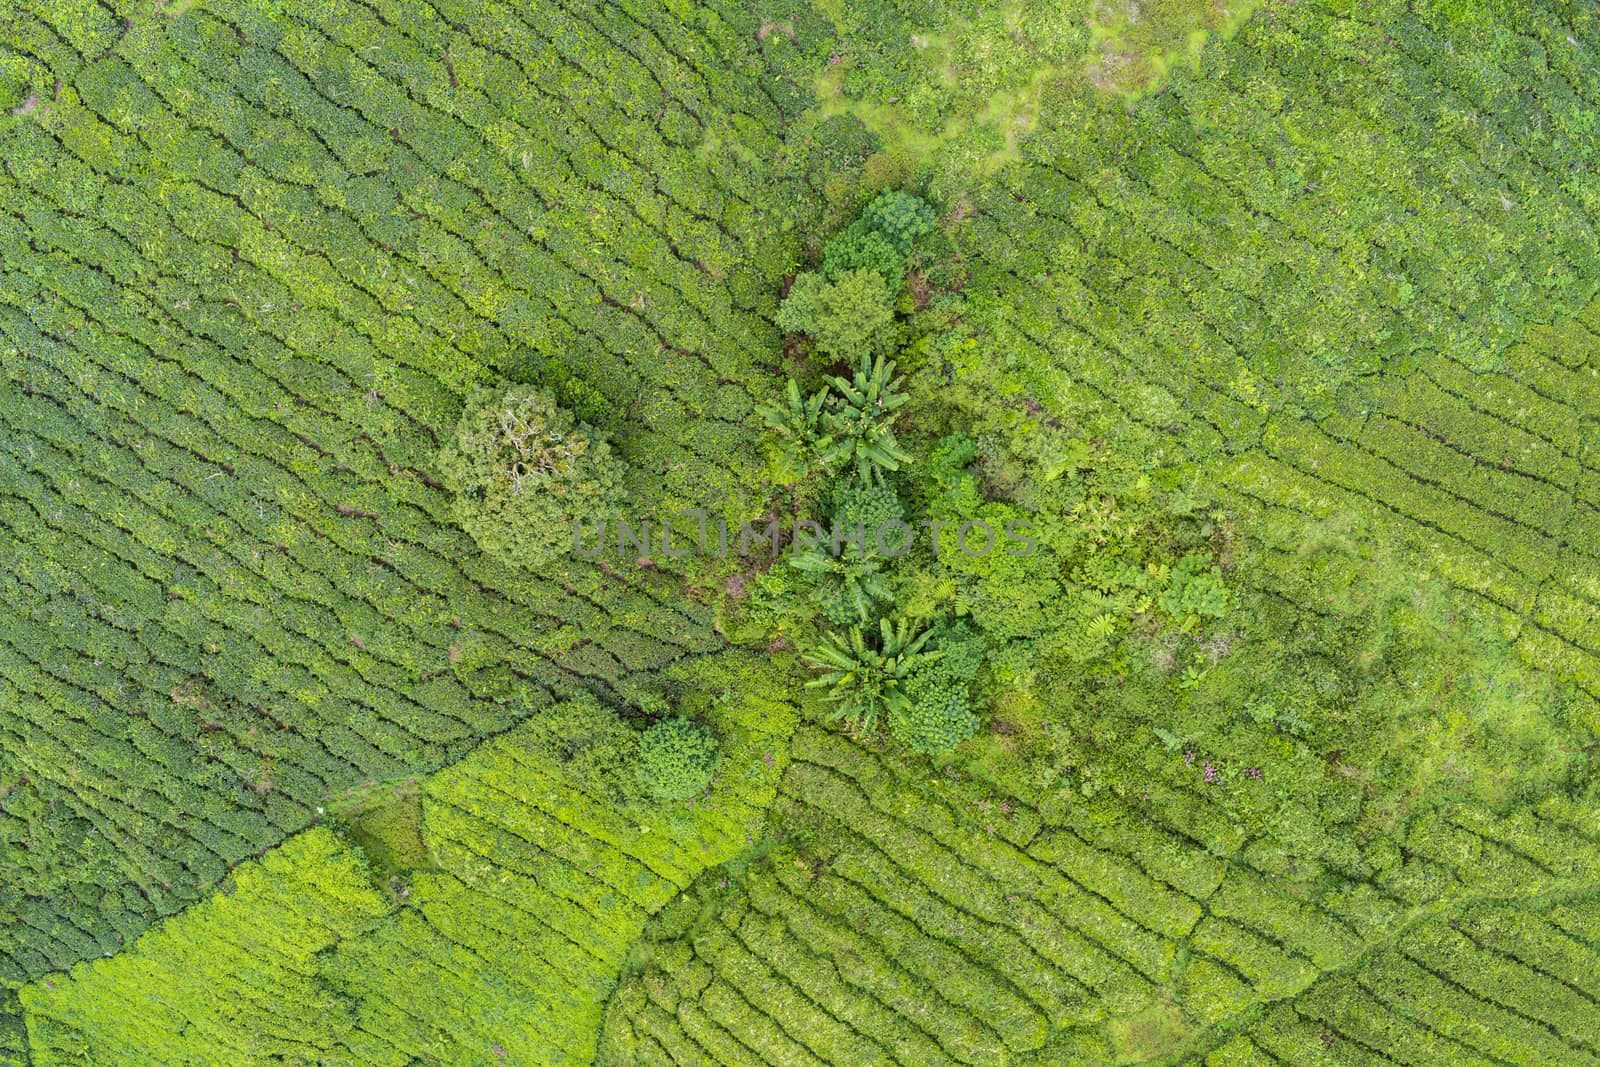 Tea plantation aerial image facing downwards on rows of camellia sinensis plants